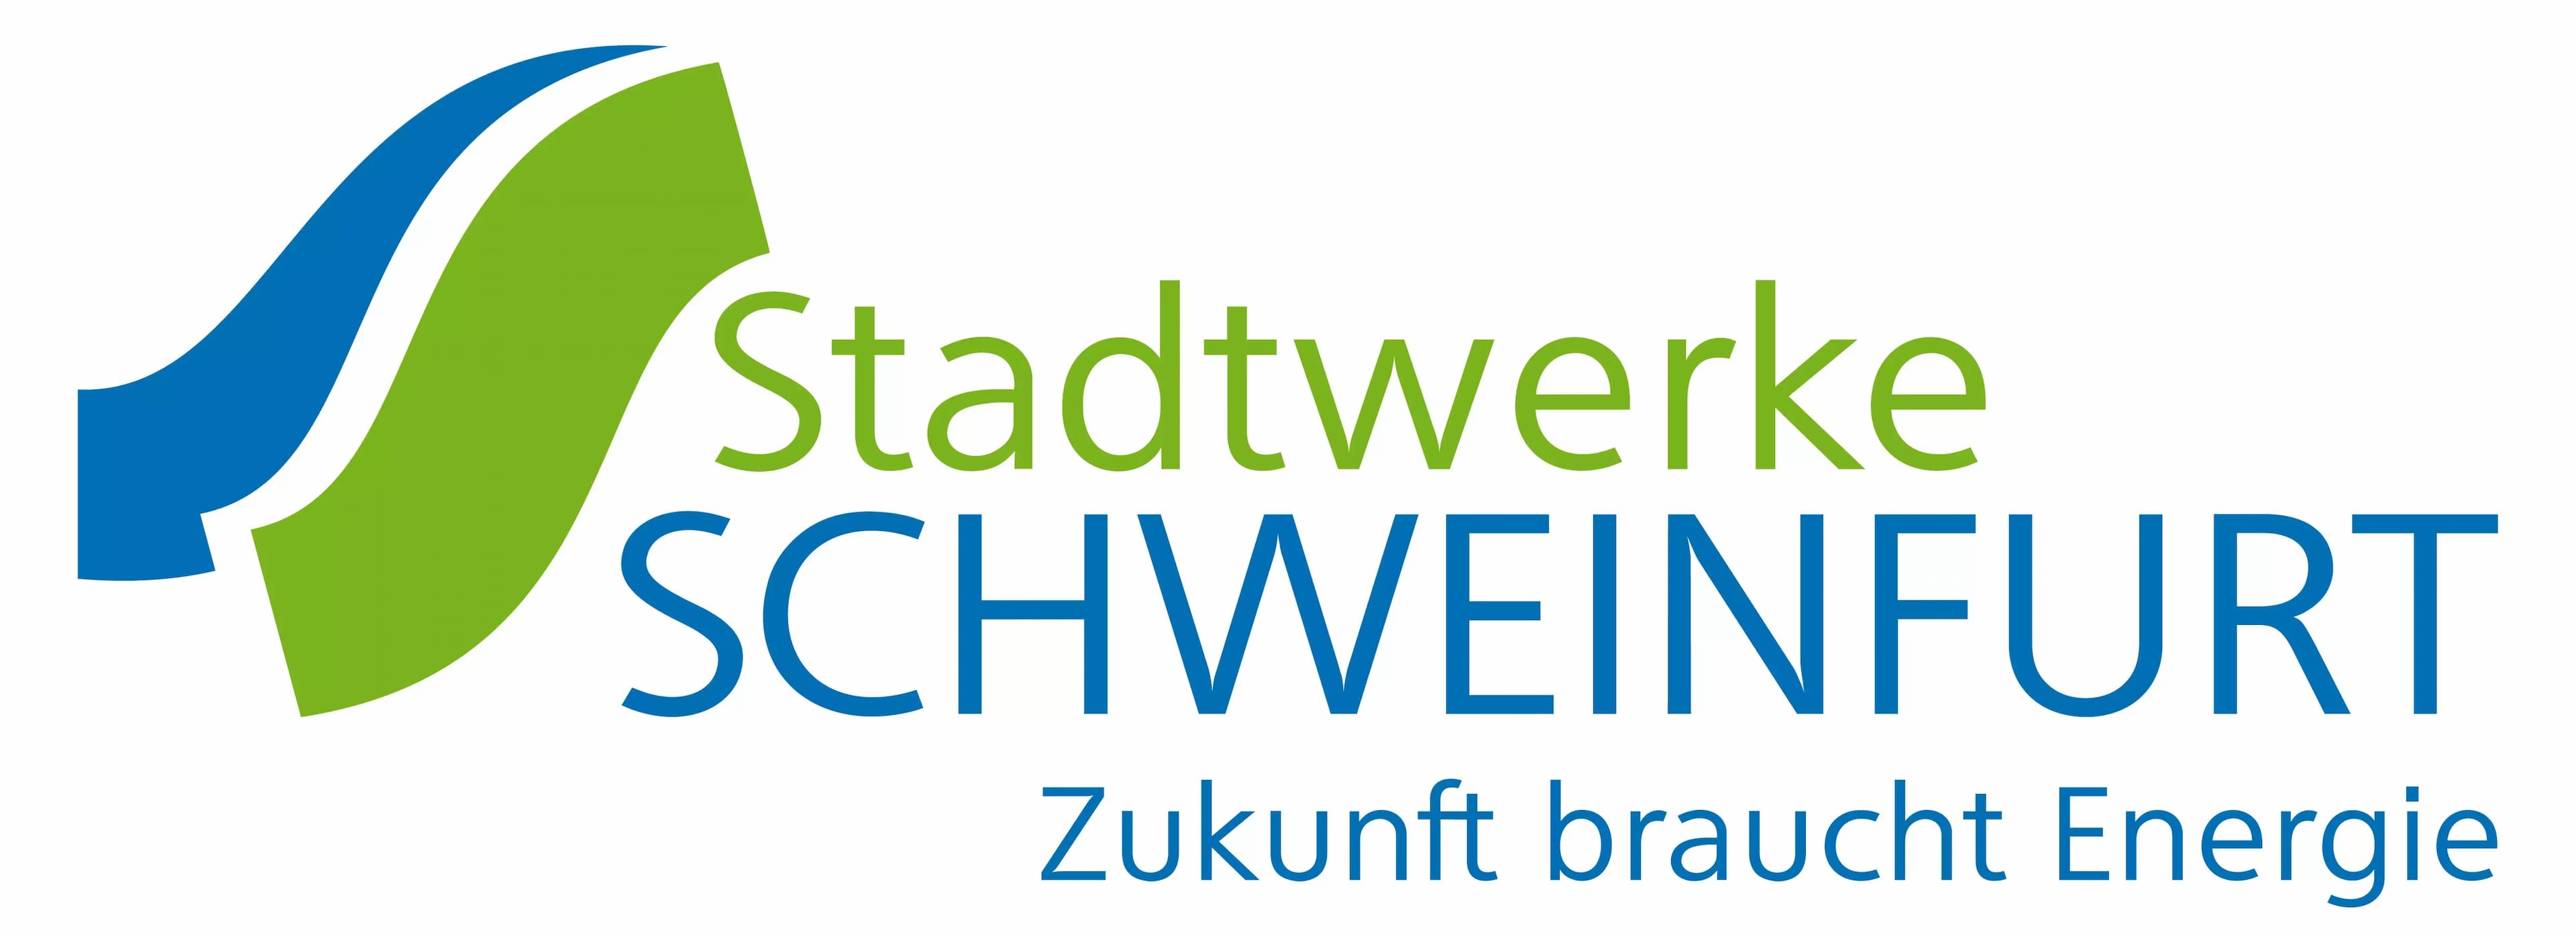 Stadtwerke Schweinfurt GmbH-logo